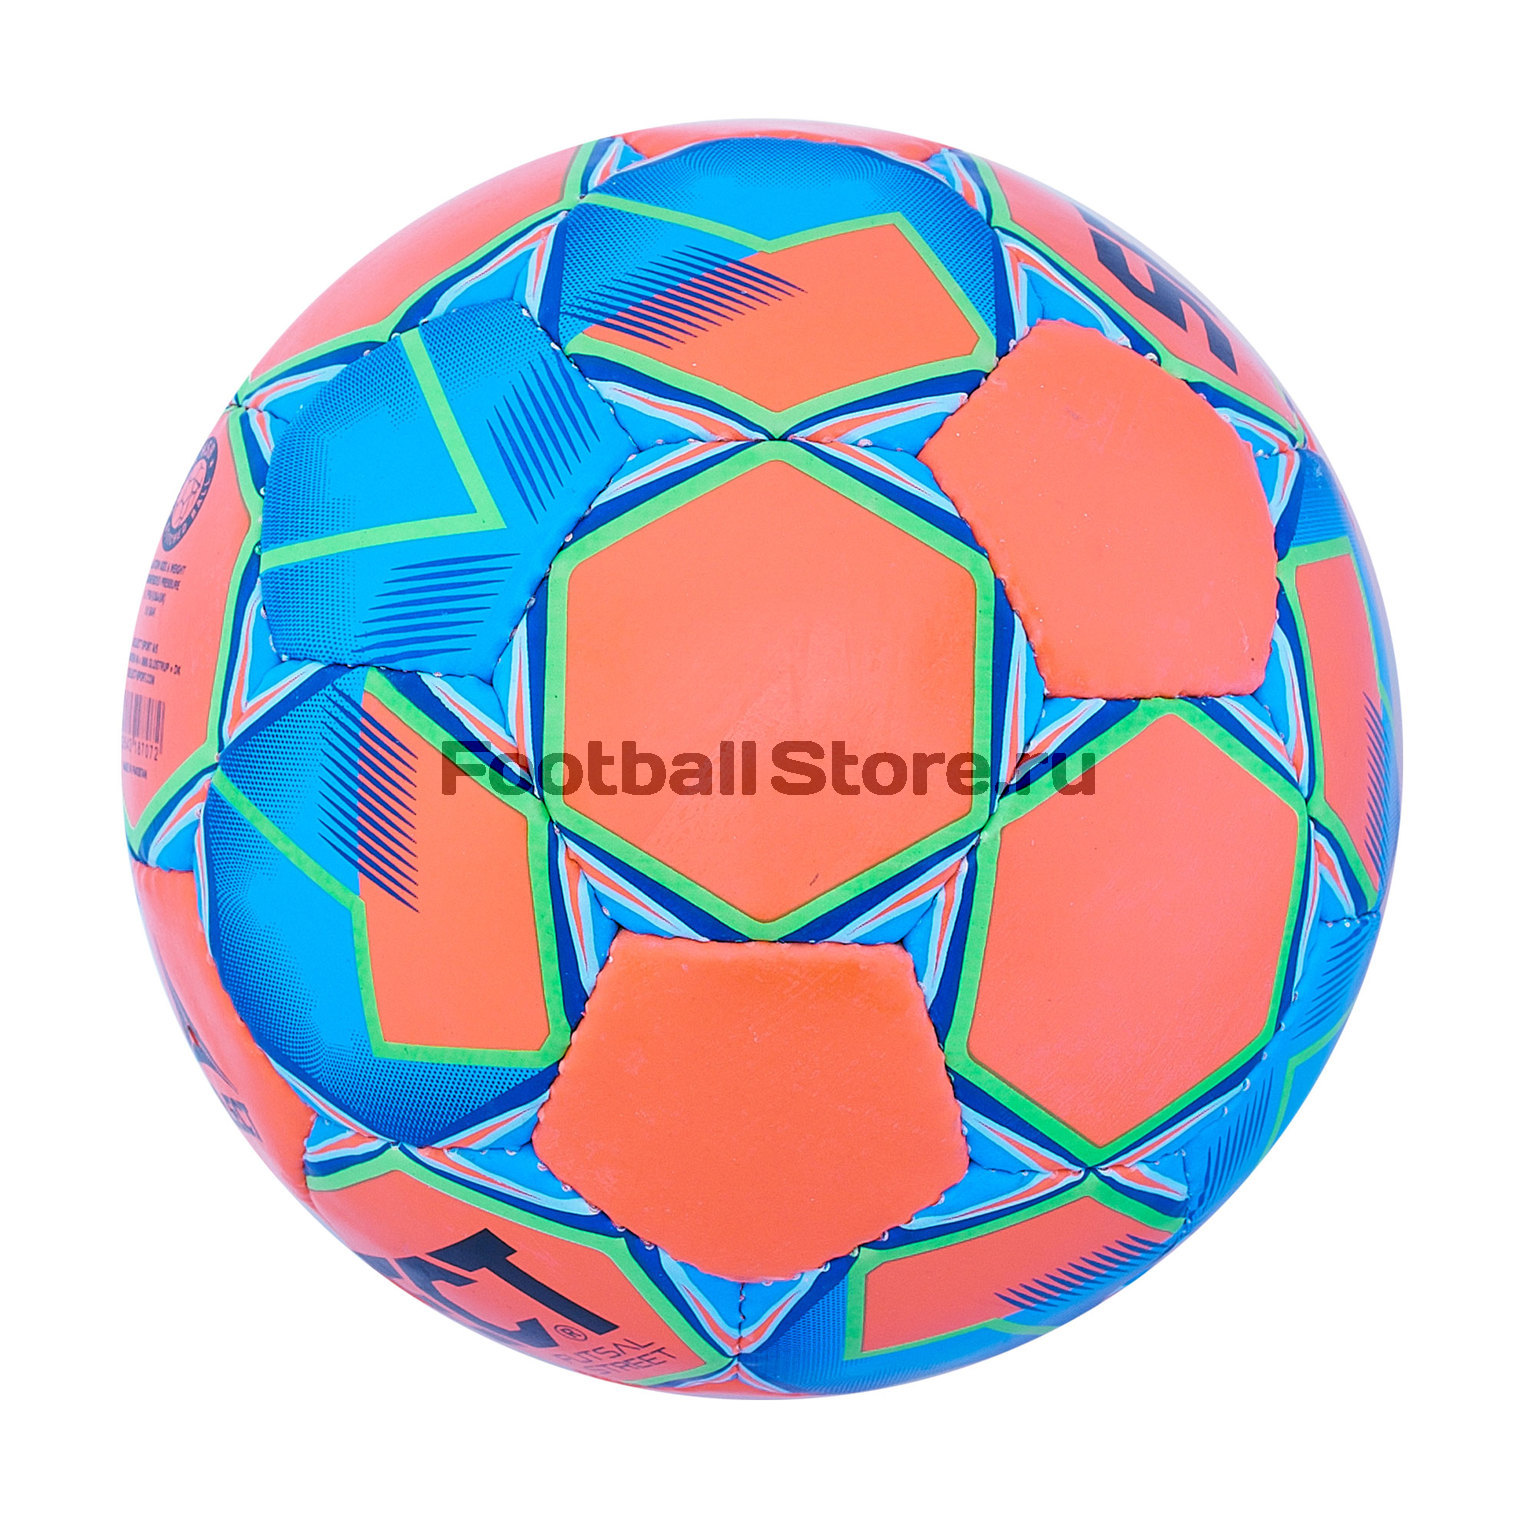 Футзальный мяч Select Futsal Street 850218-552